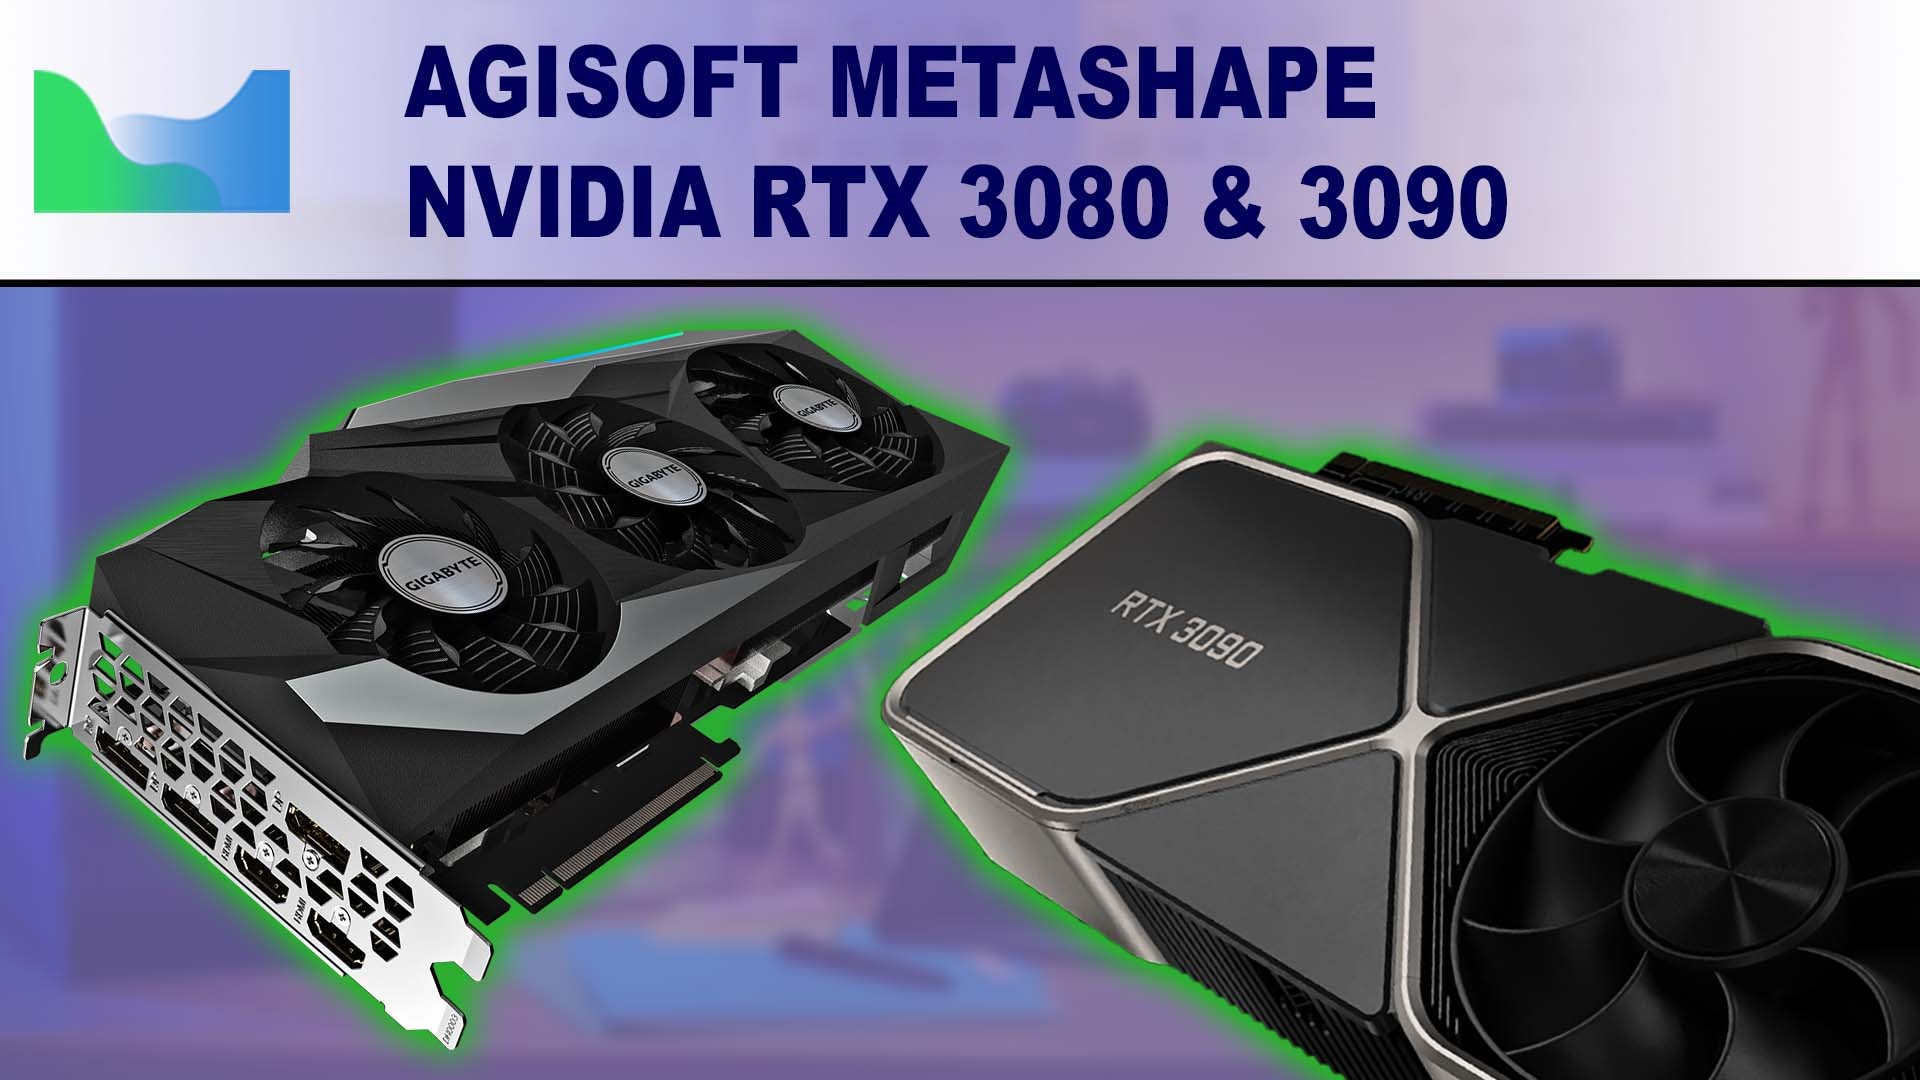 Agisoft Metashape Photogrammetry Performance Review for NVIDIA GeForce RTX 3080 10GB & 3090 24GB